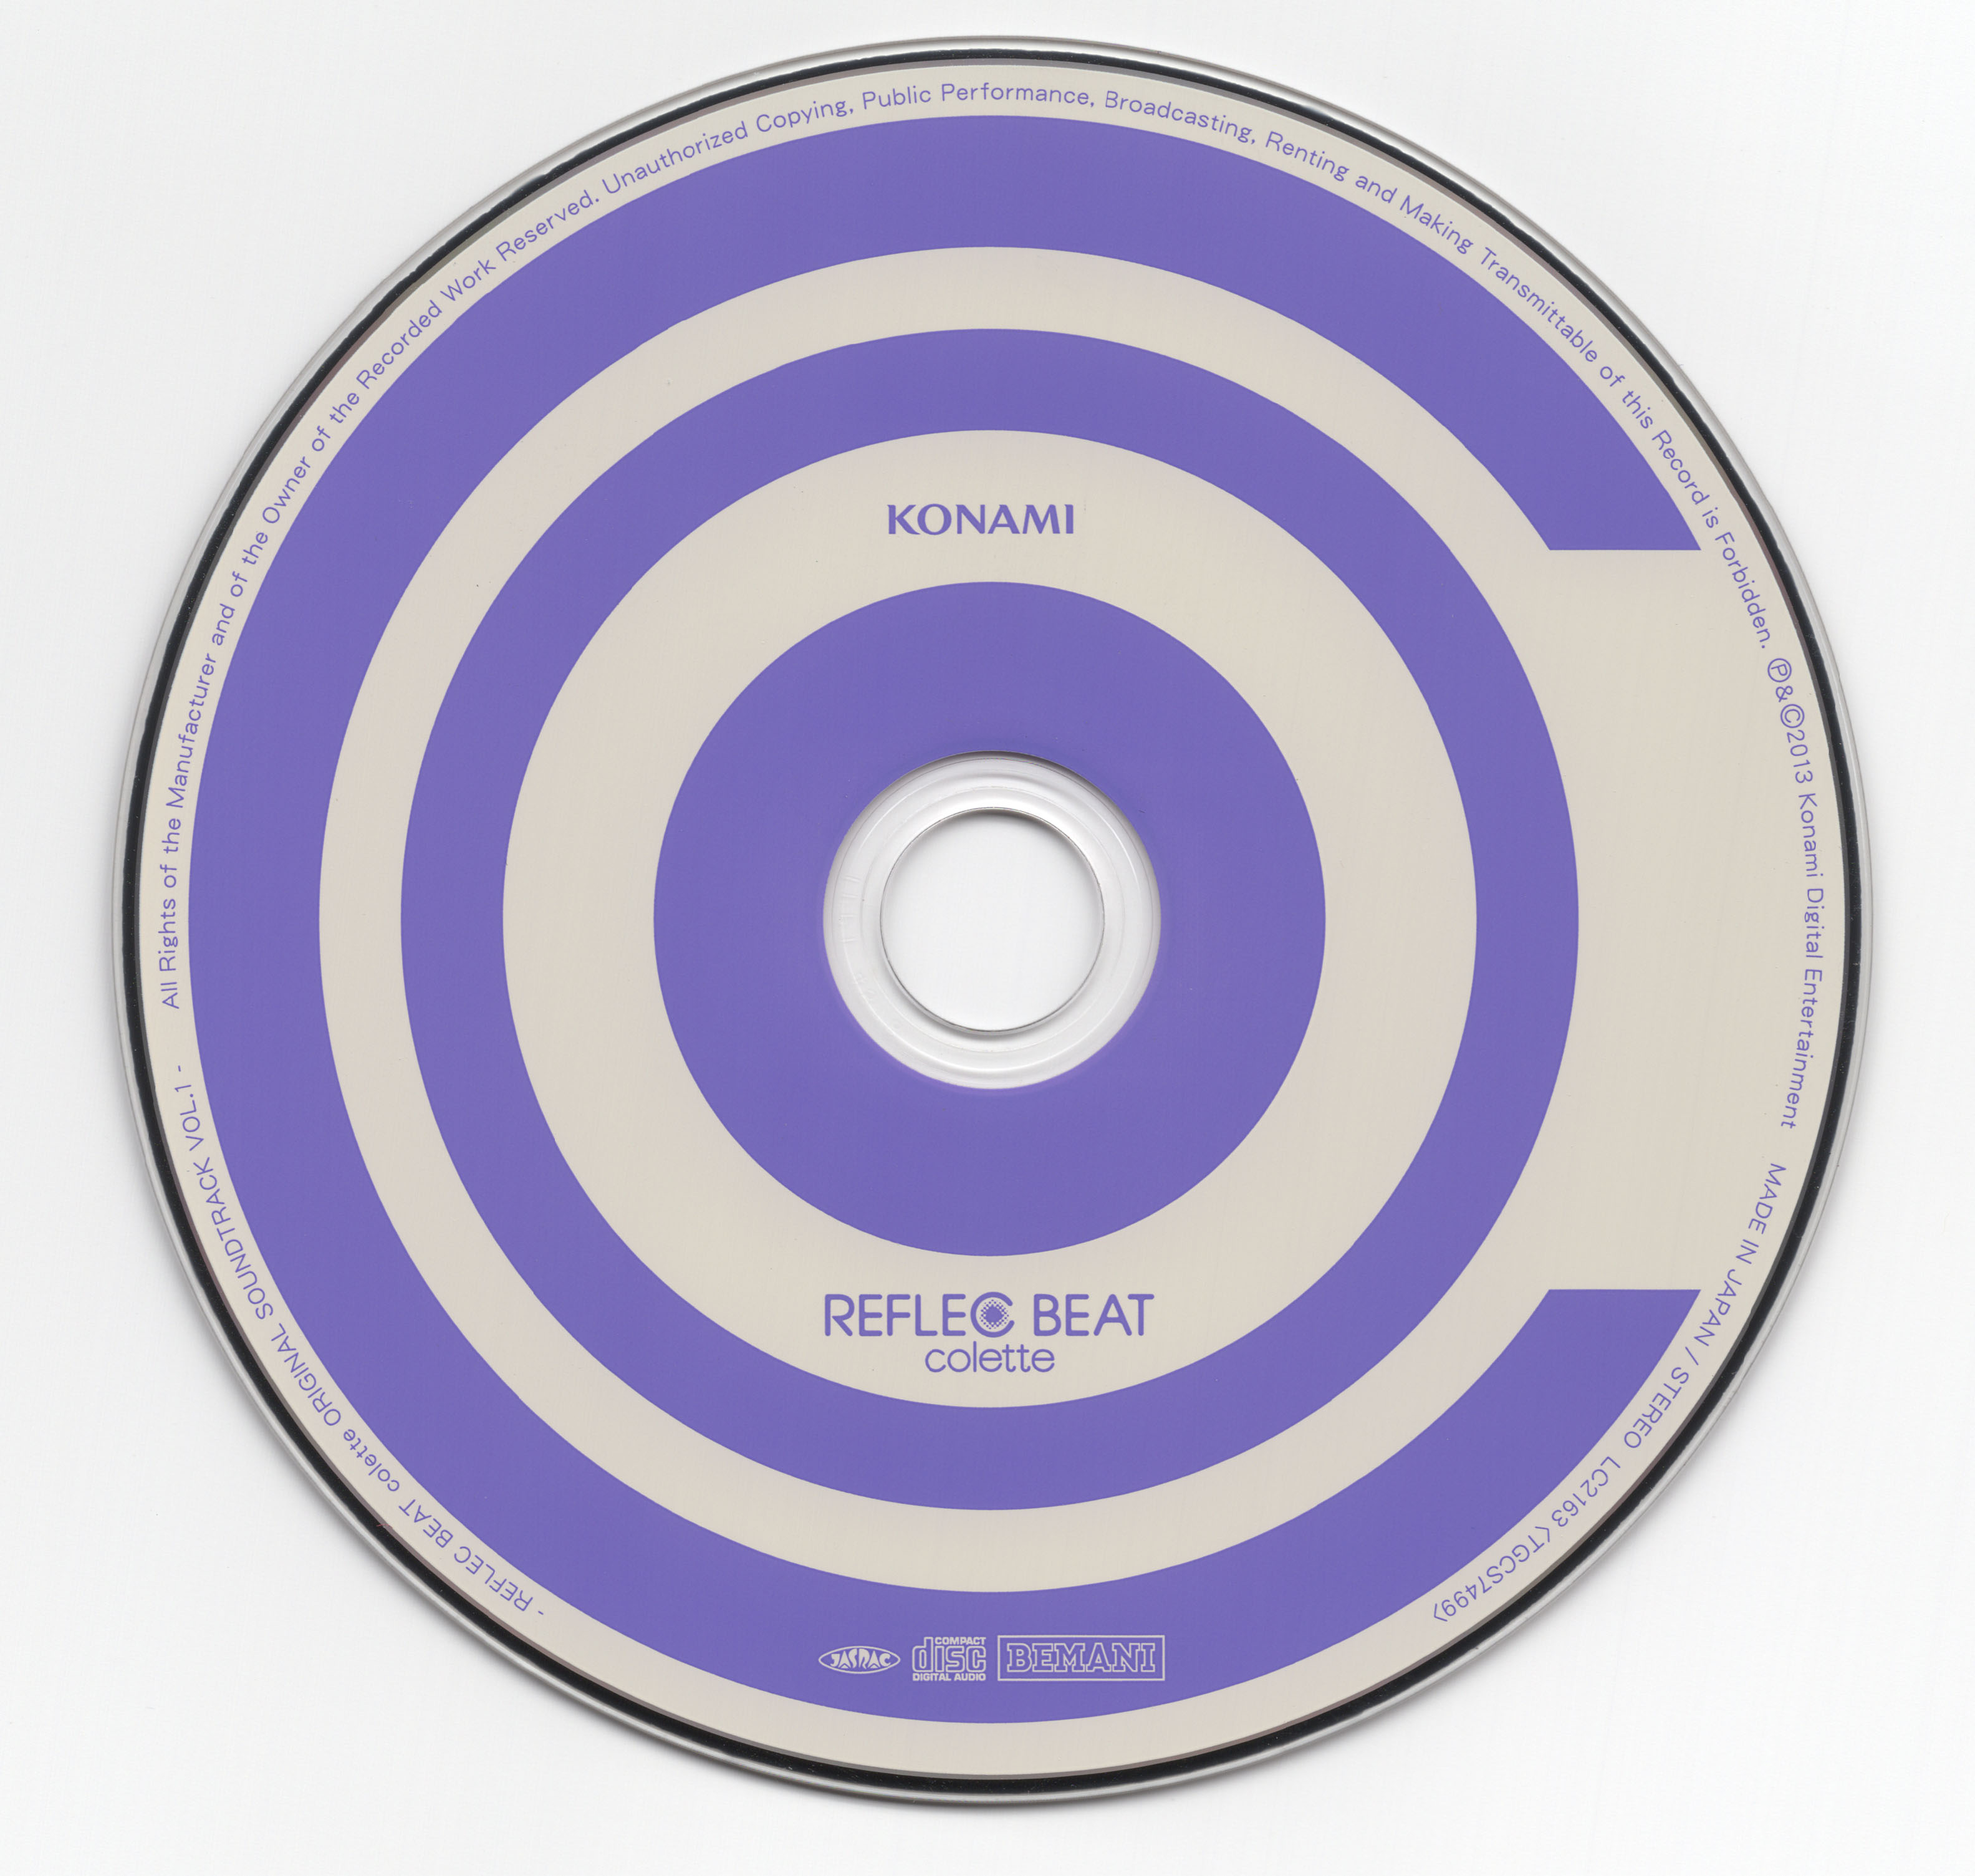 REFLEC BEAT colette ORIGINAL SOUNDTRACK VOL.1 (2013) MP3 - Download REFLEC  BEAT colette ORIGINAL SOUNDTRACK VOL.1 (2013) Soundtracks for FREE!